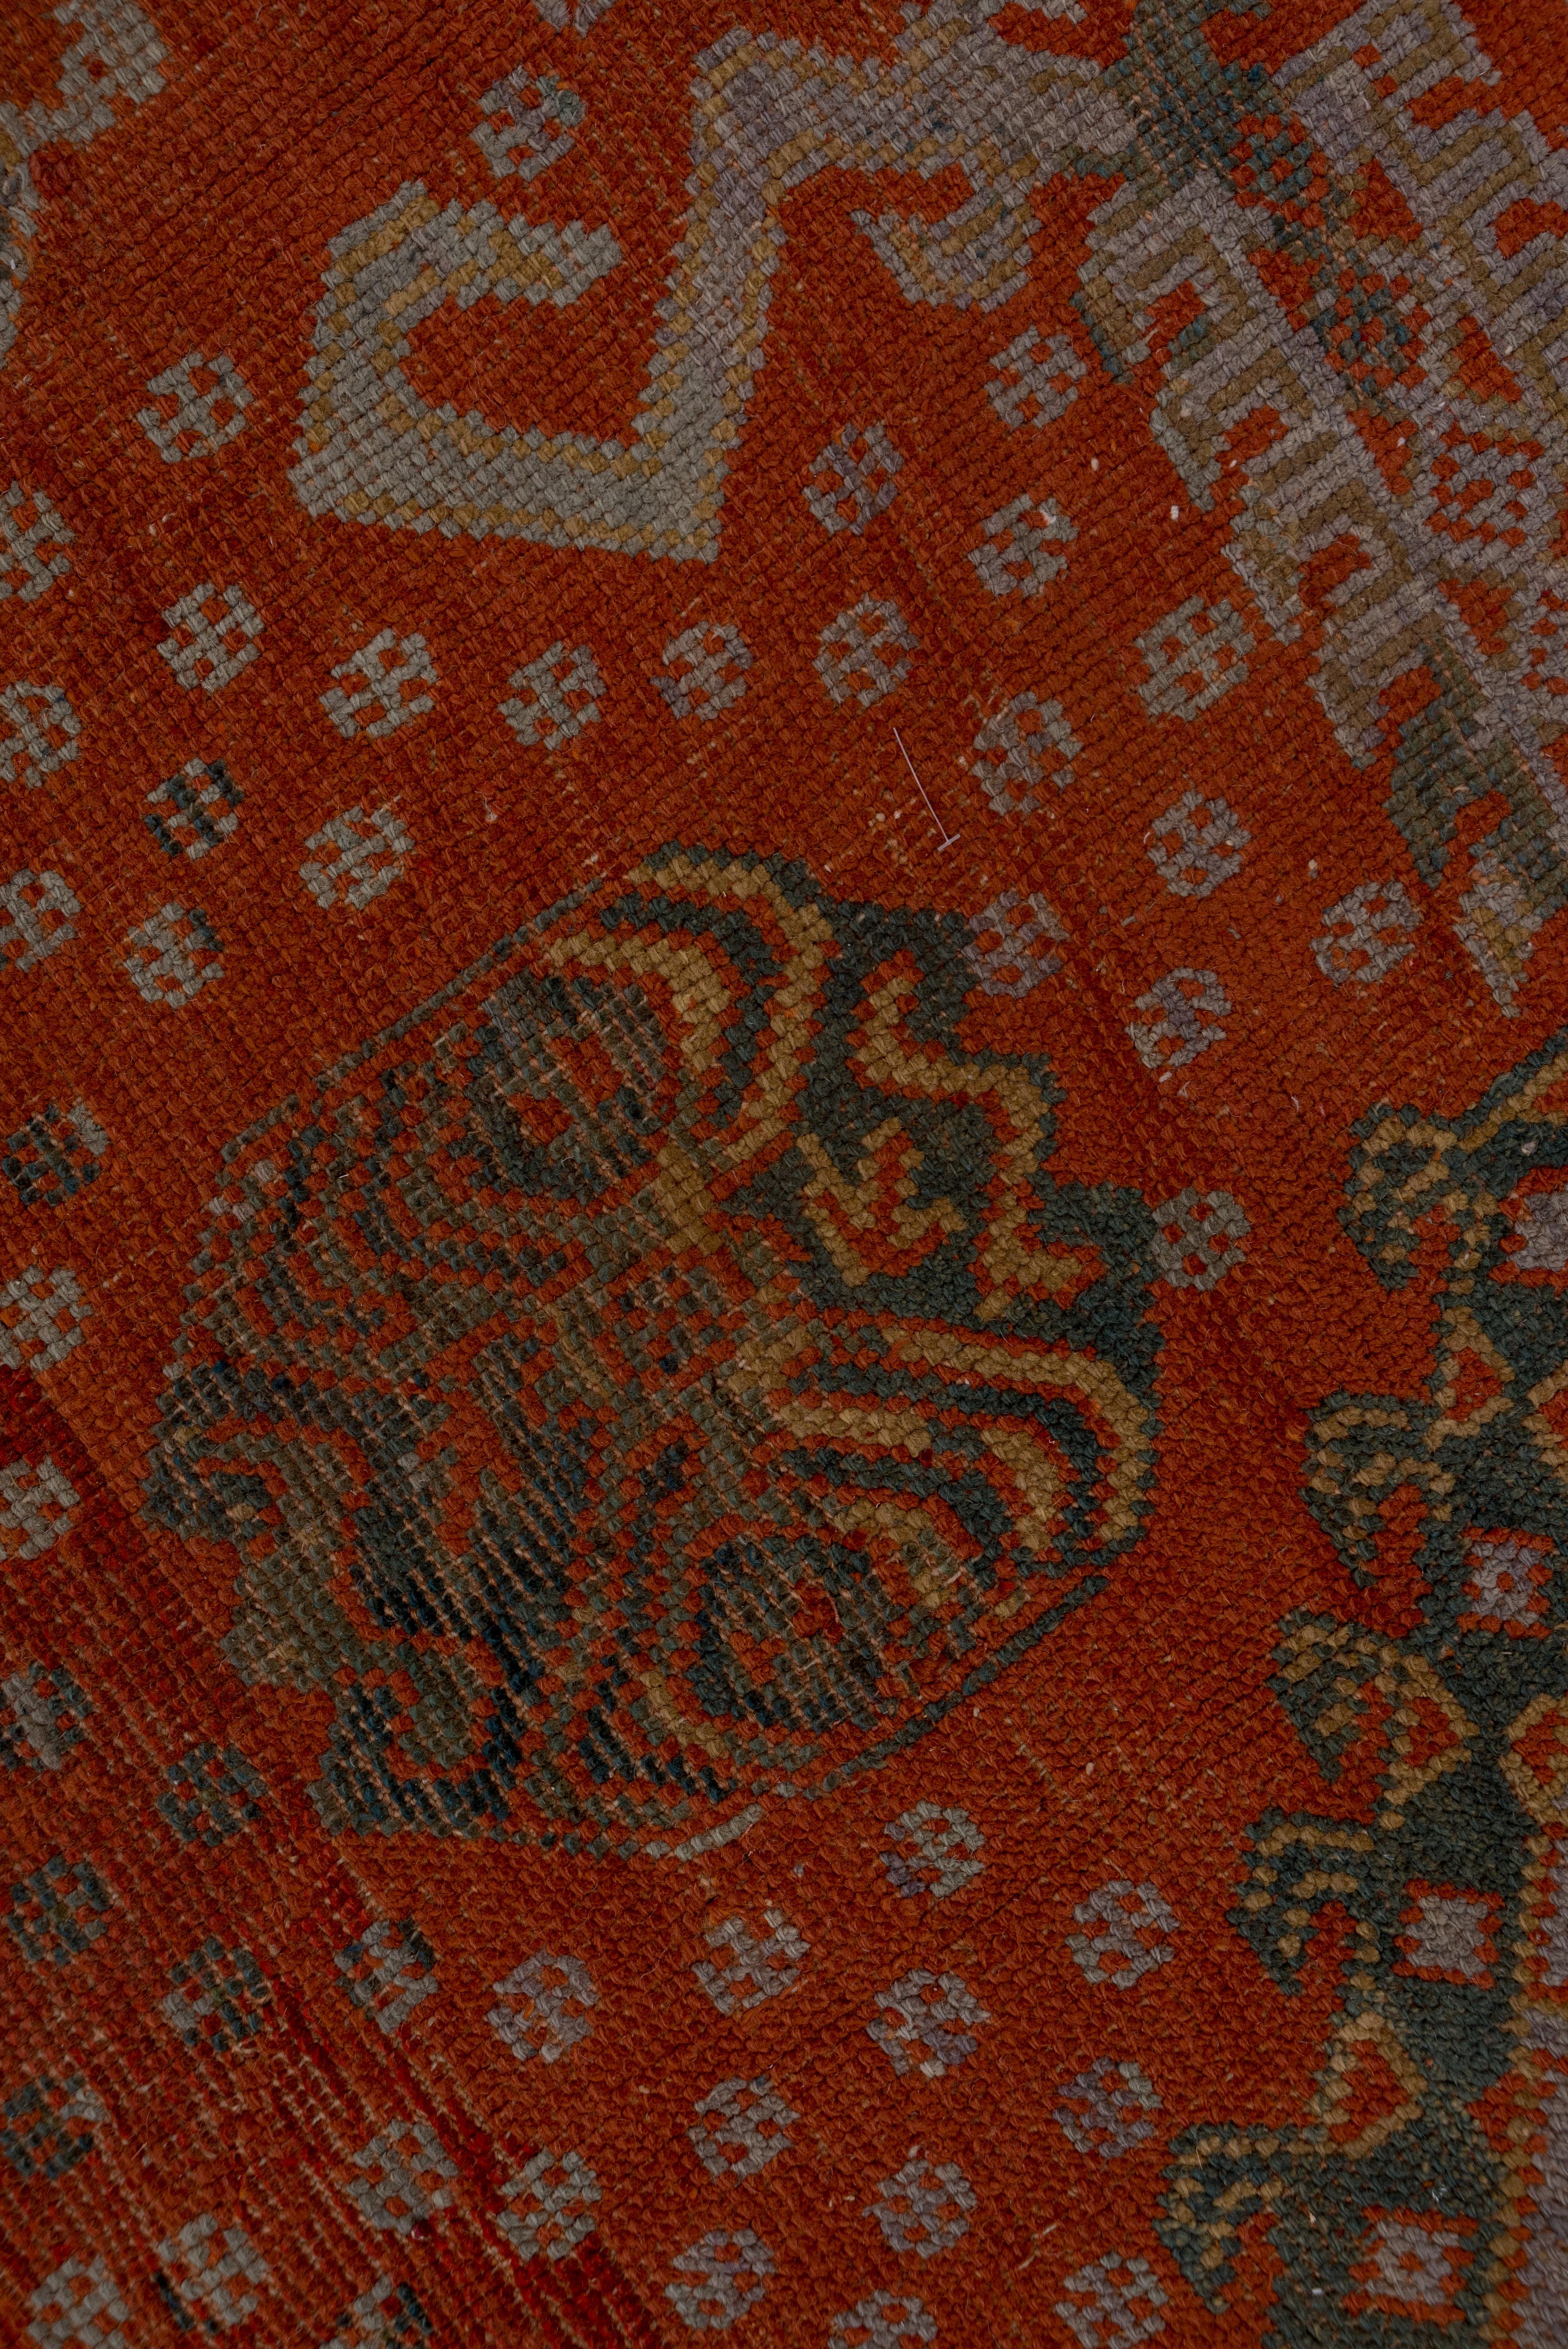 Hand-Knotted Antique Turkish Oushak Large Carpet, Orange & Teal Palette, Circa 1920s For Sale